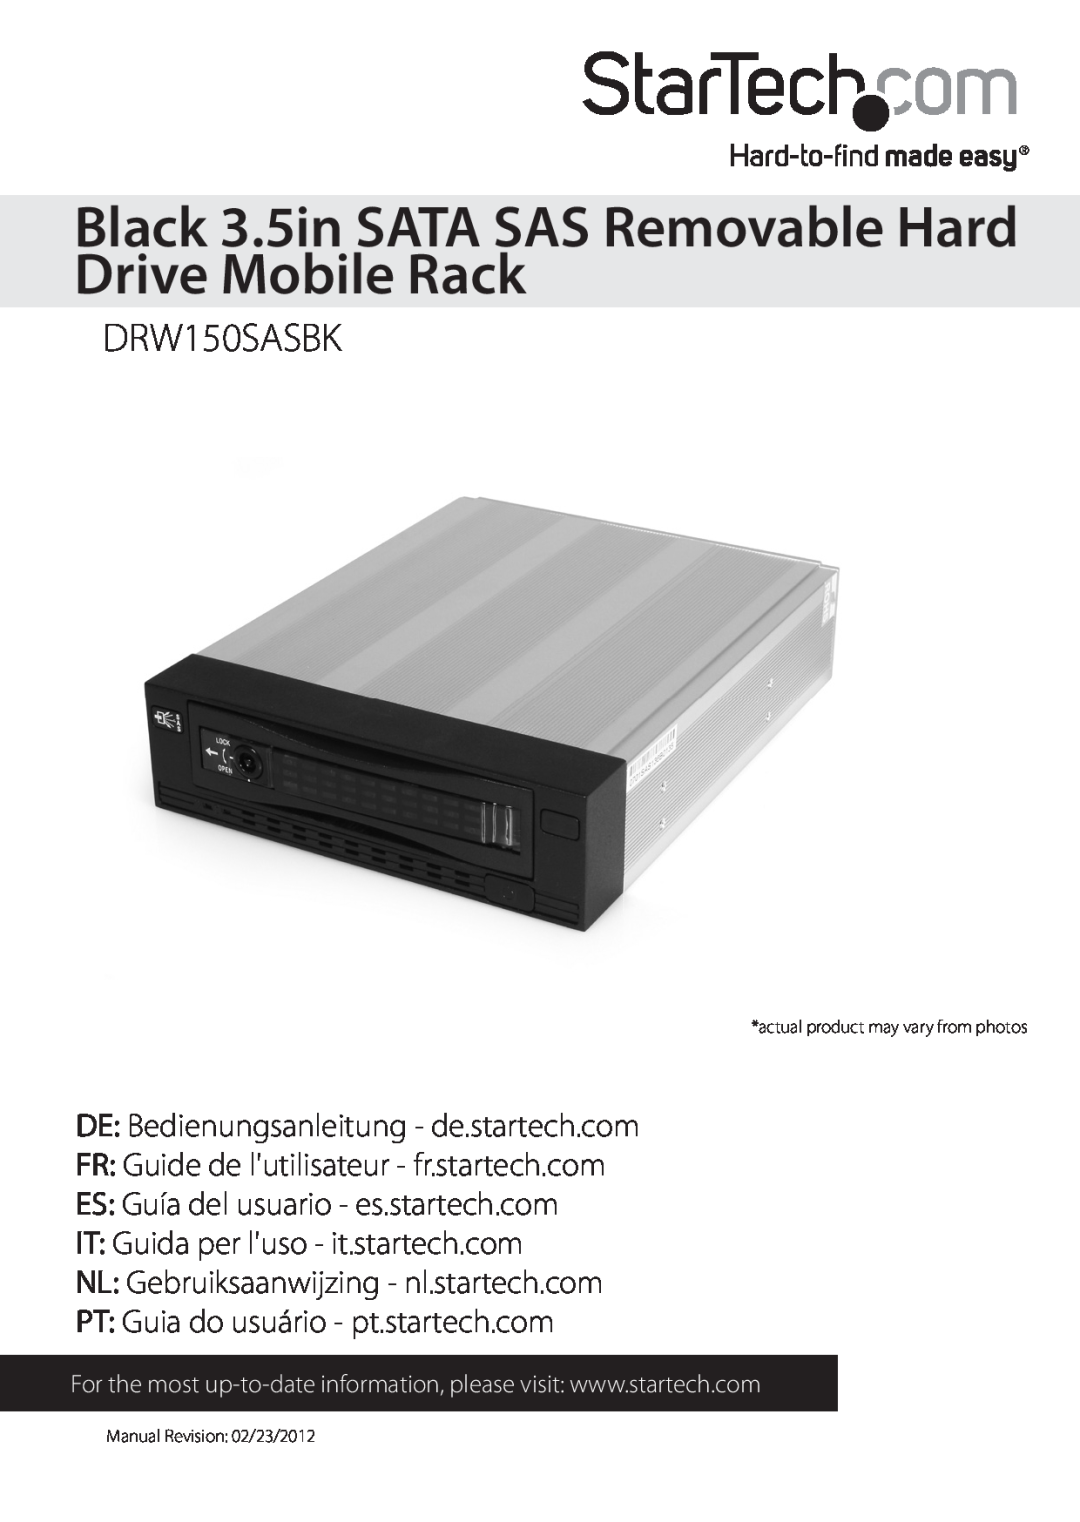 StarTech.com drw150sasbk manual Black 3.5in SATA SAS Removable Hard Drive Mobile Rack, DRW150SASBK 